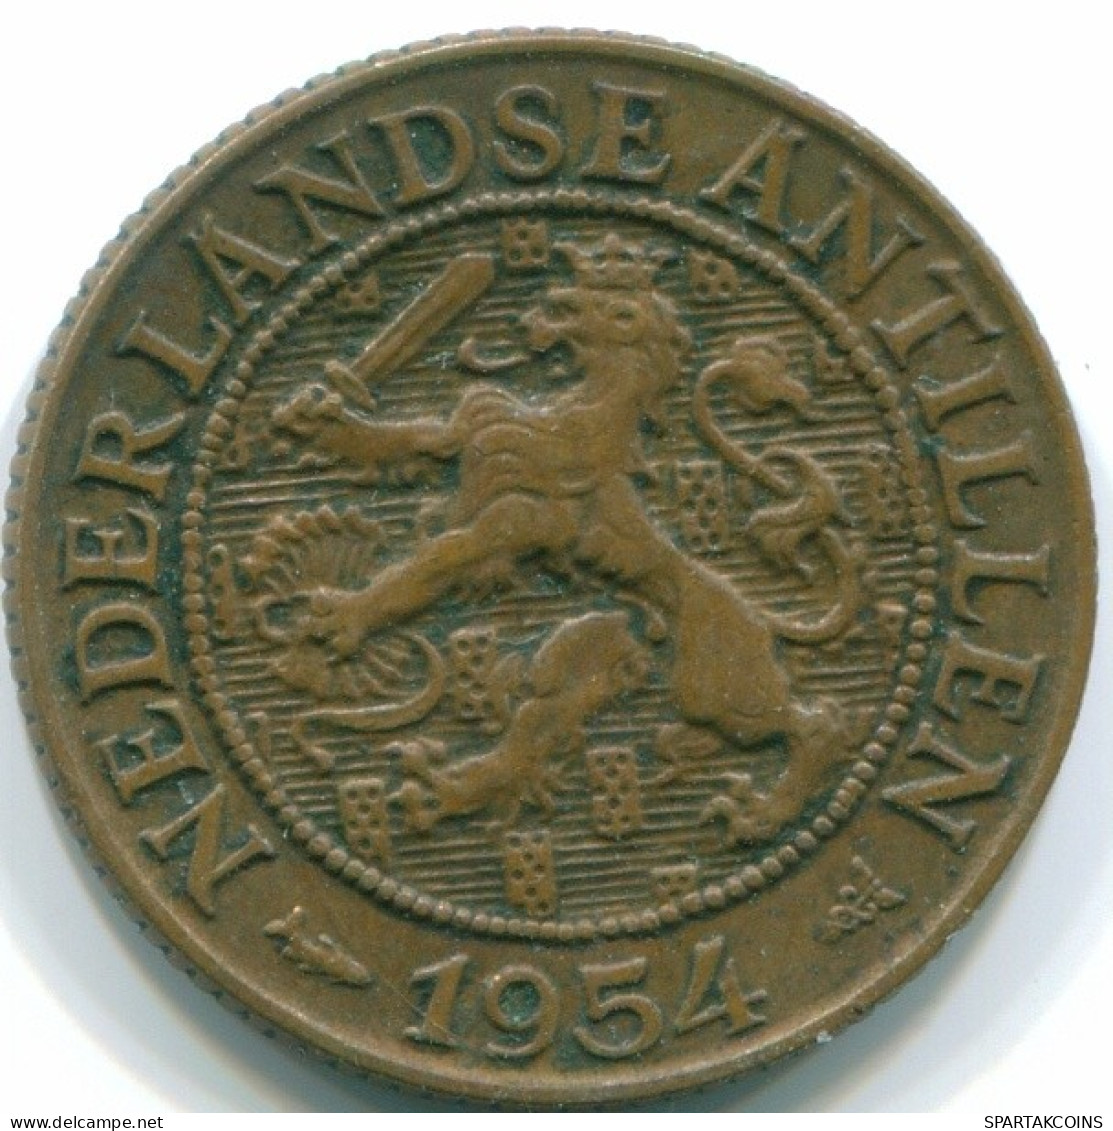 1 CENT 1954 NETHERLANDS ANTILLES Bronze Fish Colonial Coin #S11010.U.A - Netherlands Antilles